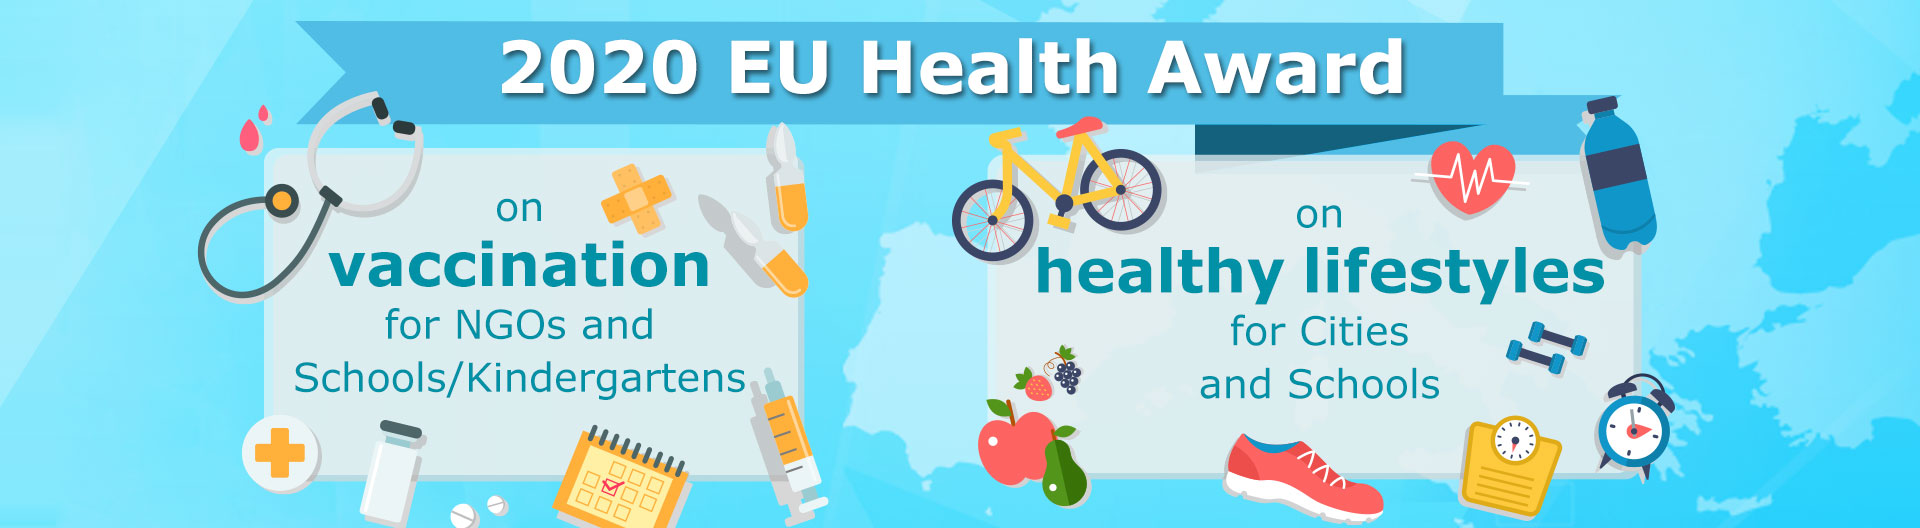 Europska komisija produljila rokove za Zdravstvenu nagradu EU 2020. - Slika 1